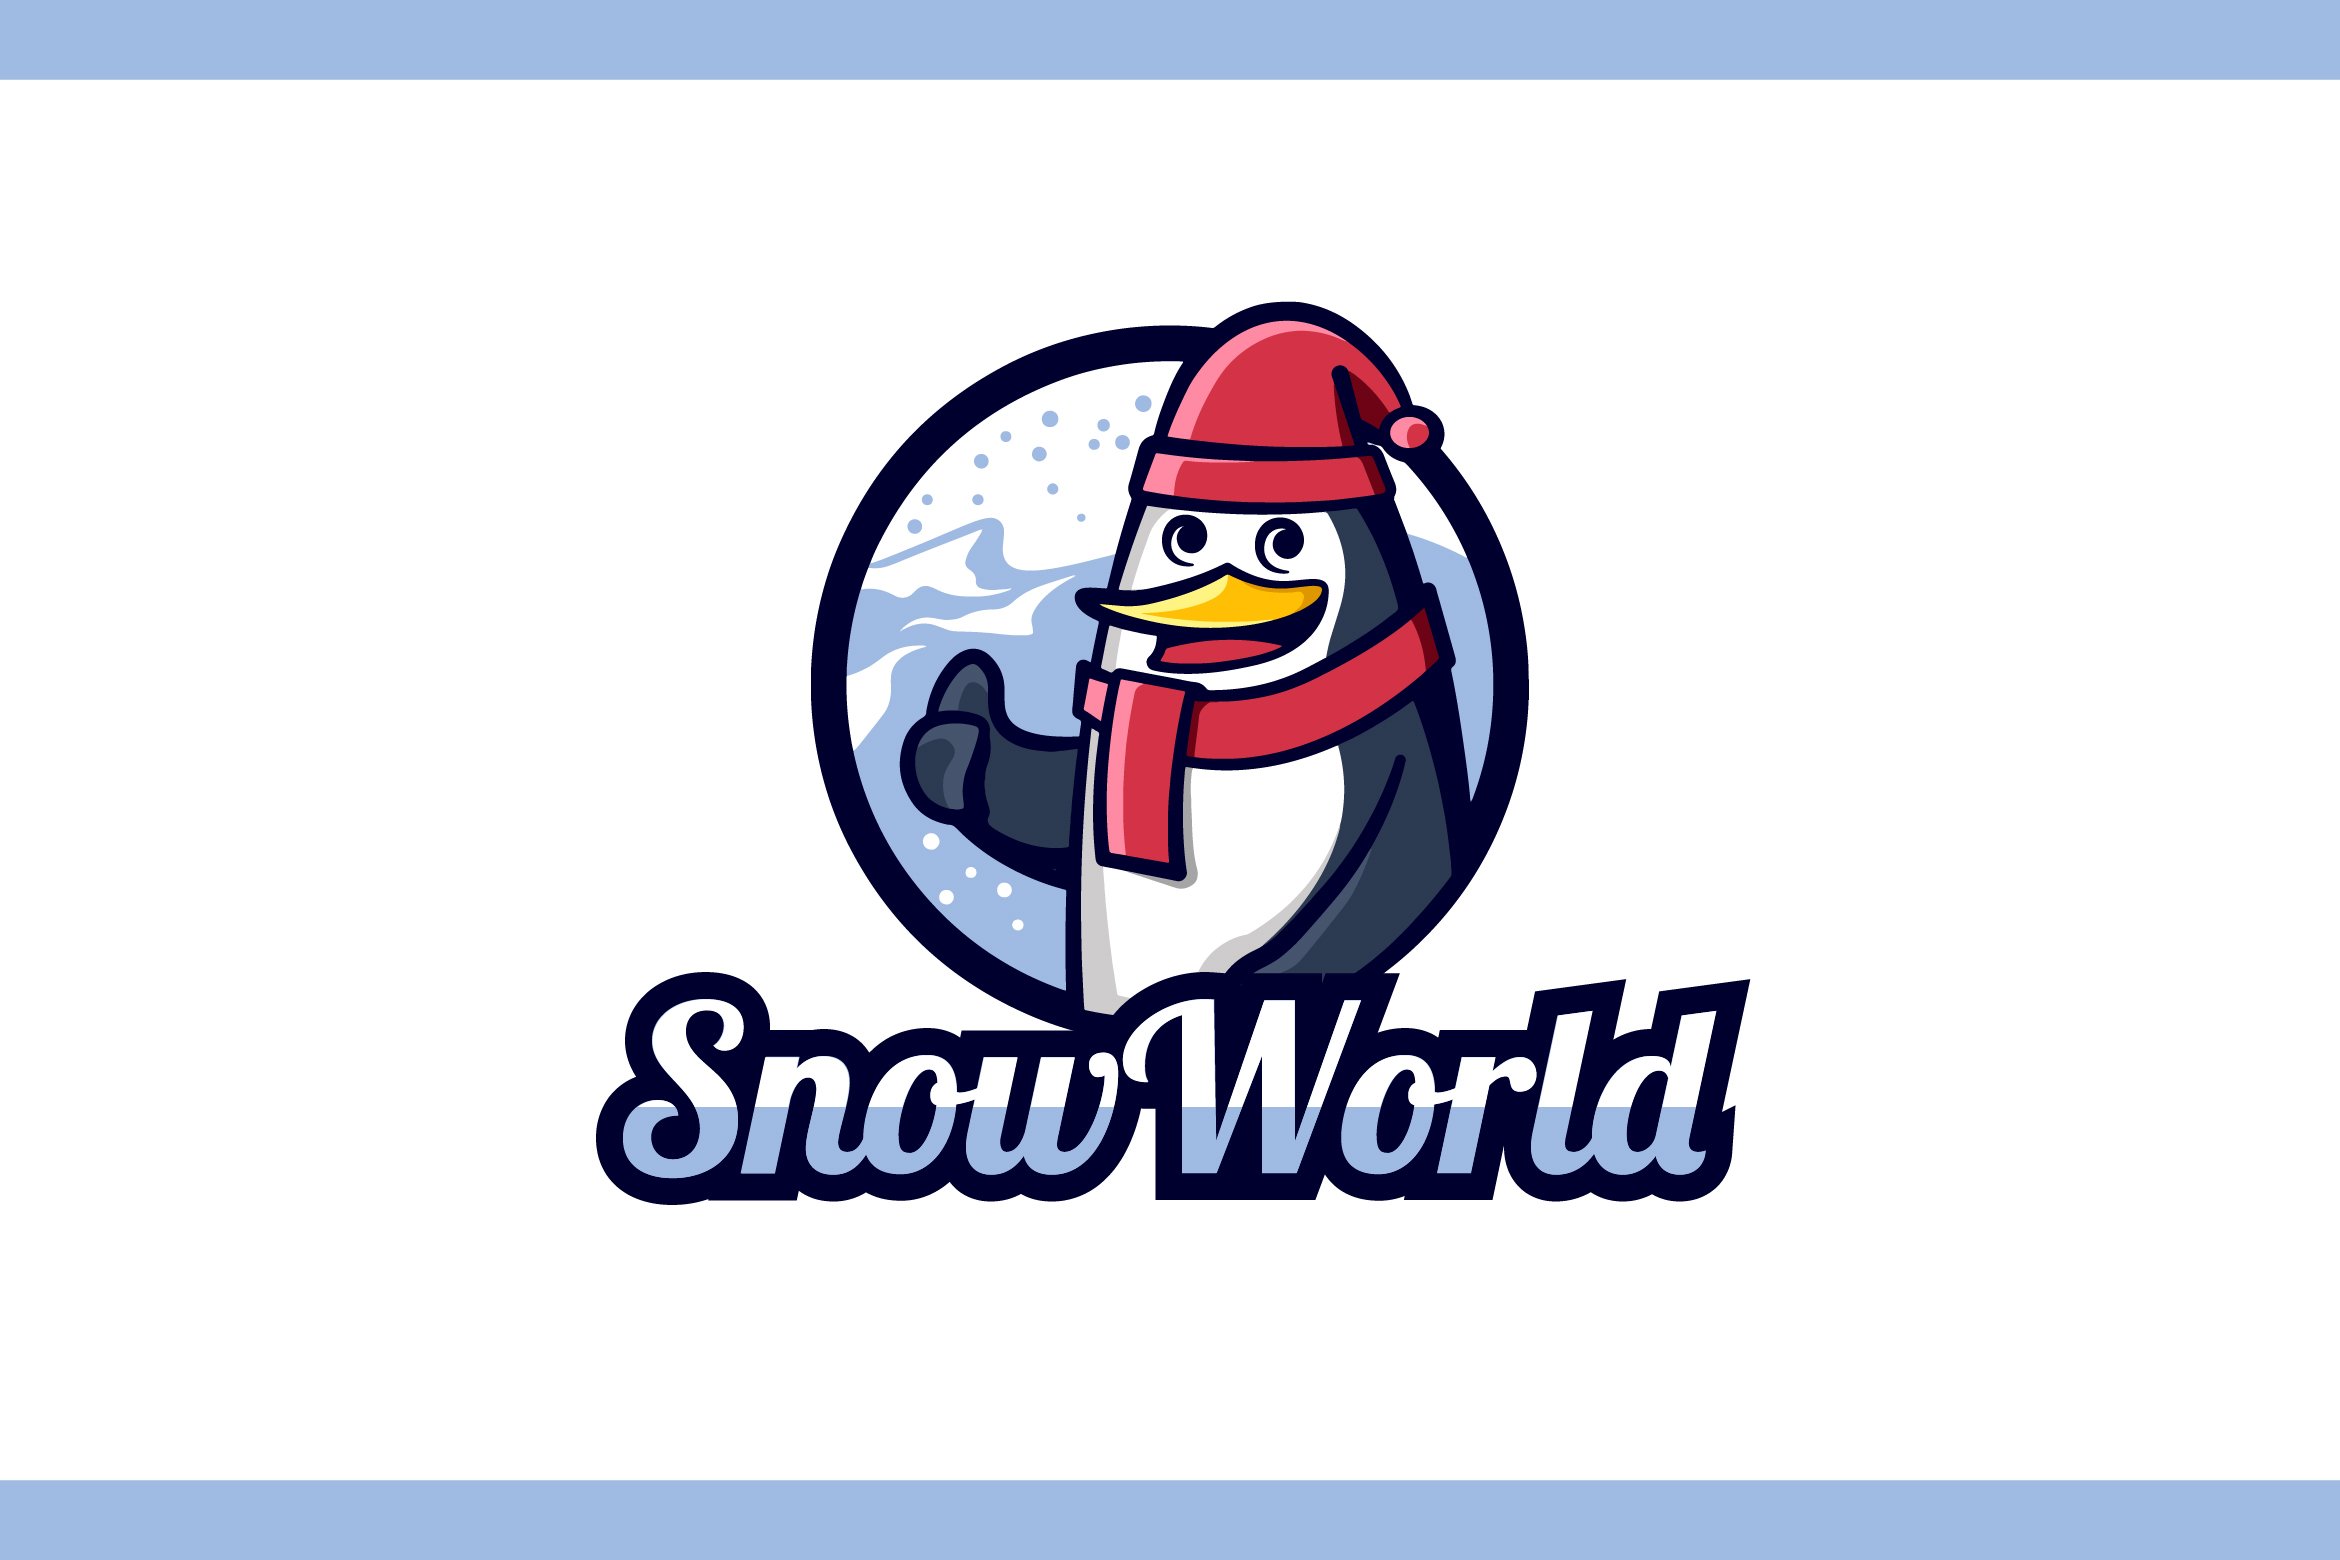 Penguin Snow World Logo cover image.